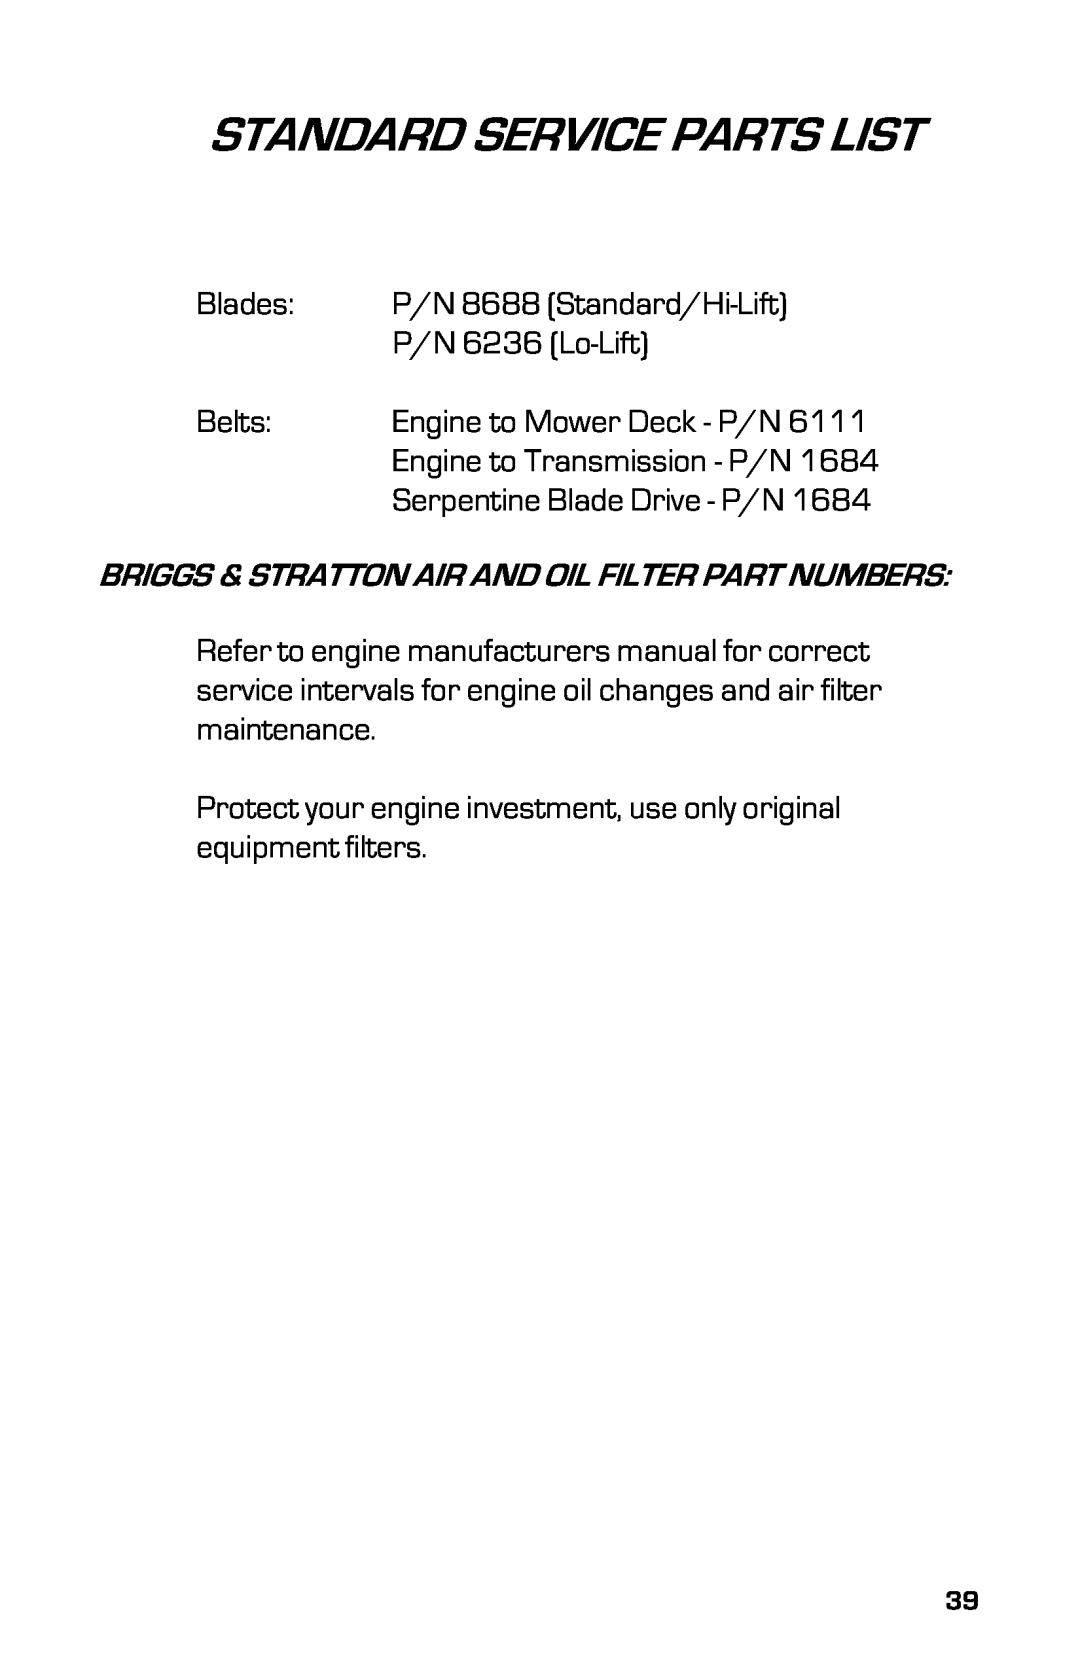 Dixon ZTRCLASSIC manual Standard Service Parts List, Blades, P/N 8688 Standard/Hi-Lift, P/N 6236 Lo-Lift, Belts 